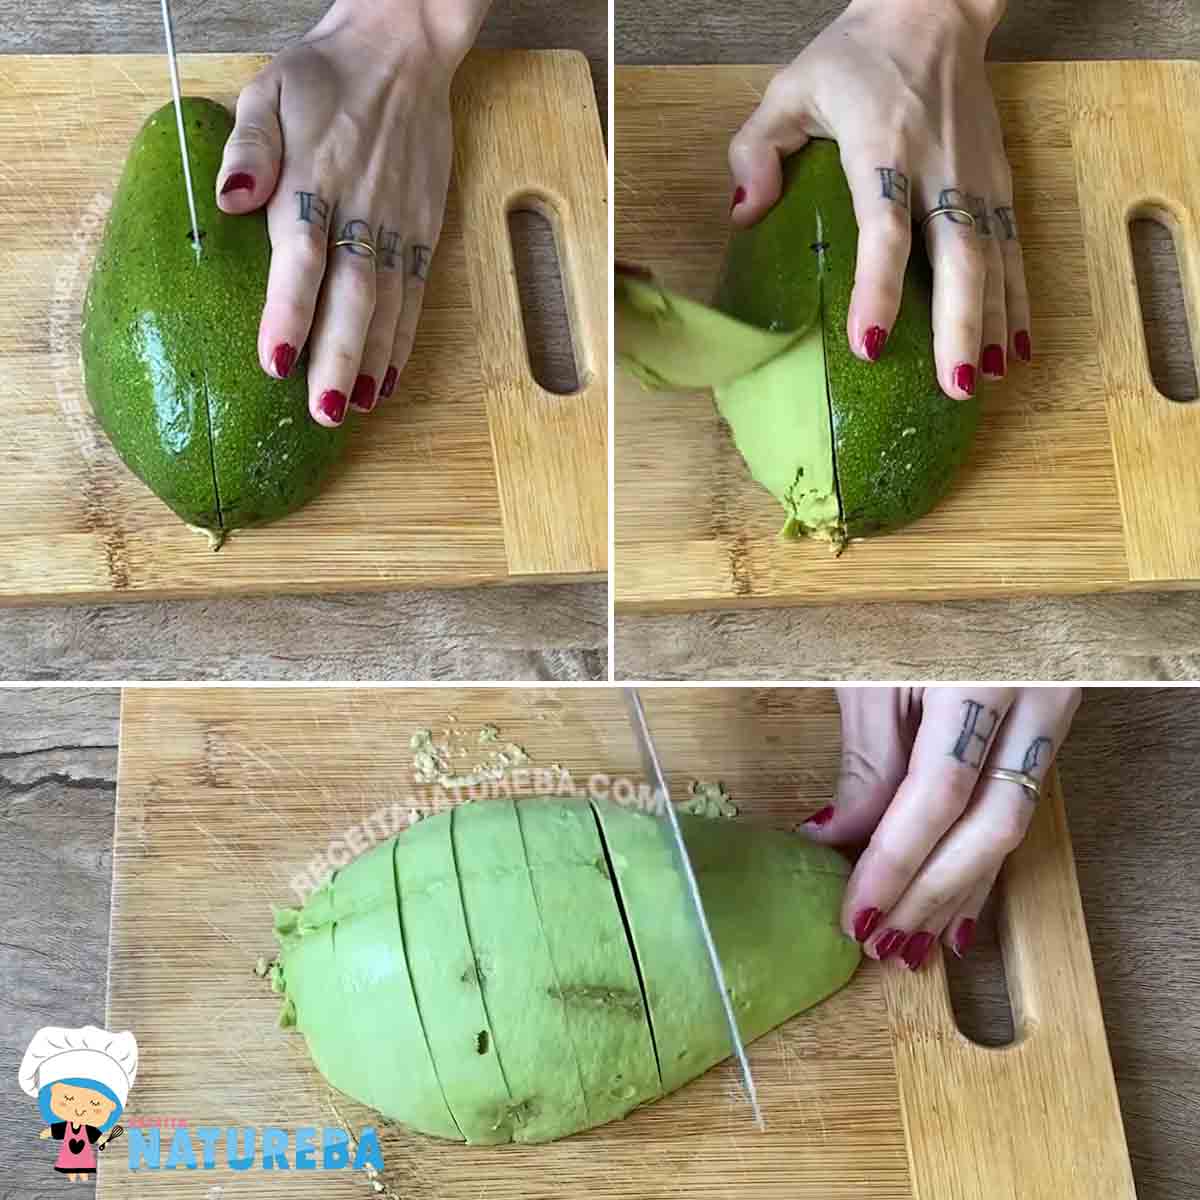 picando o abacate